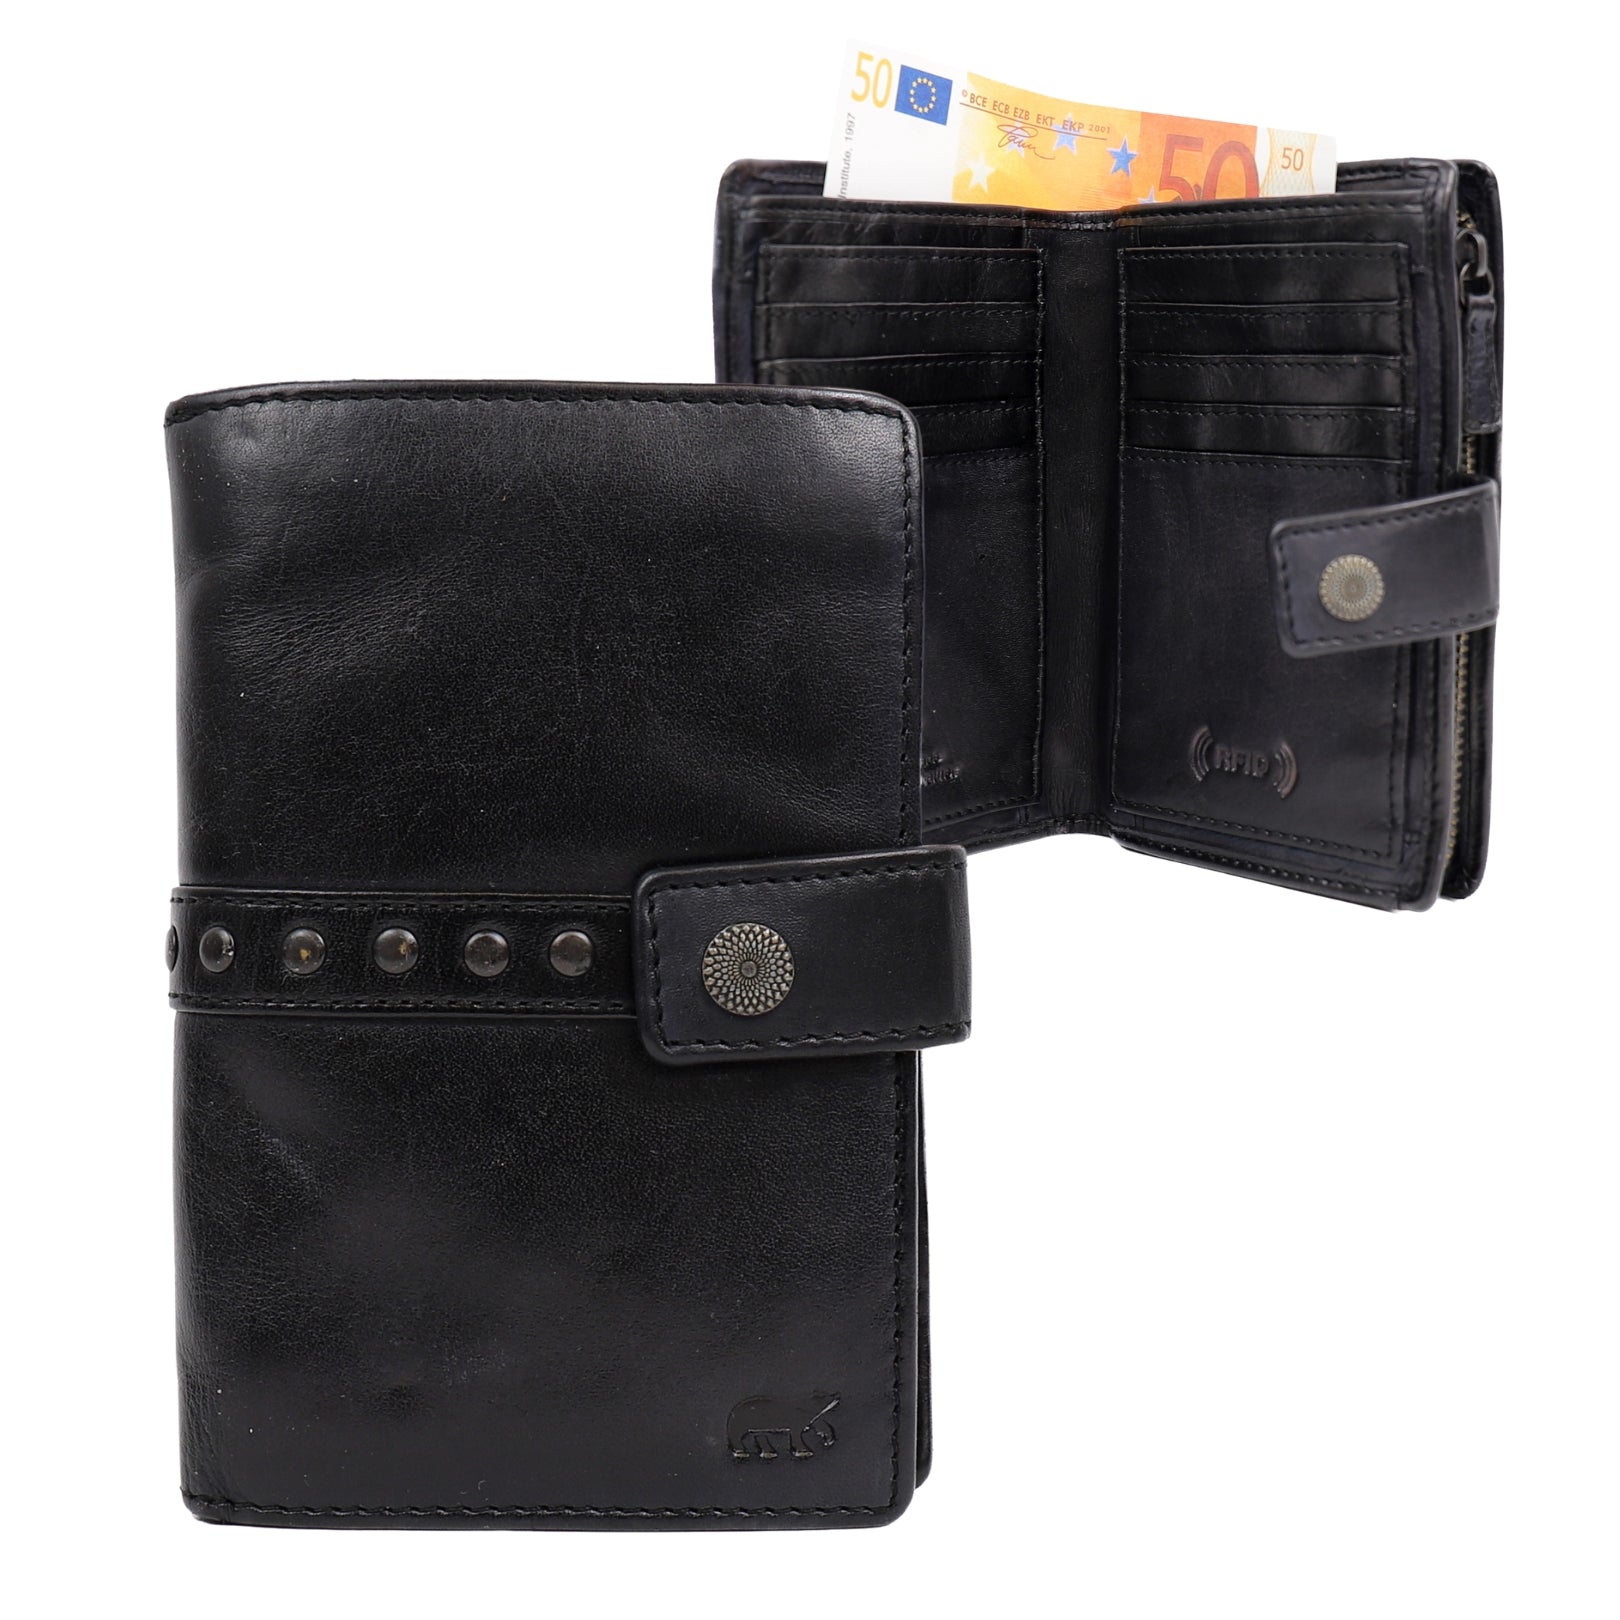 Wallet 'Sanne' black studs - CL 15087